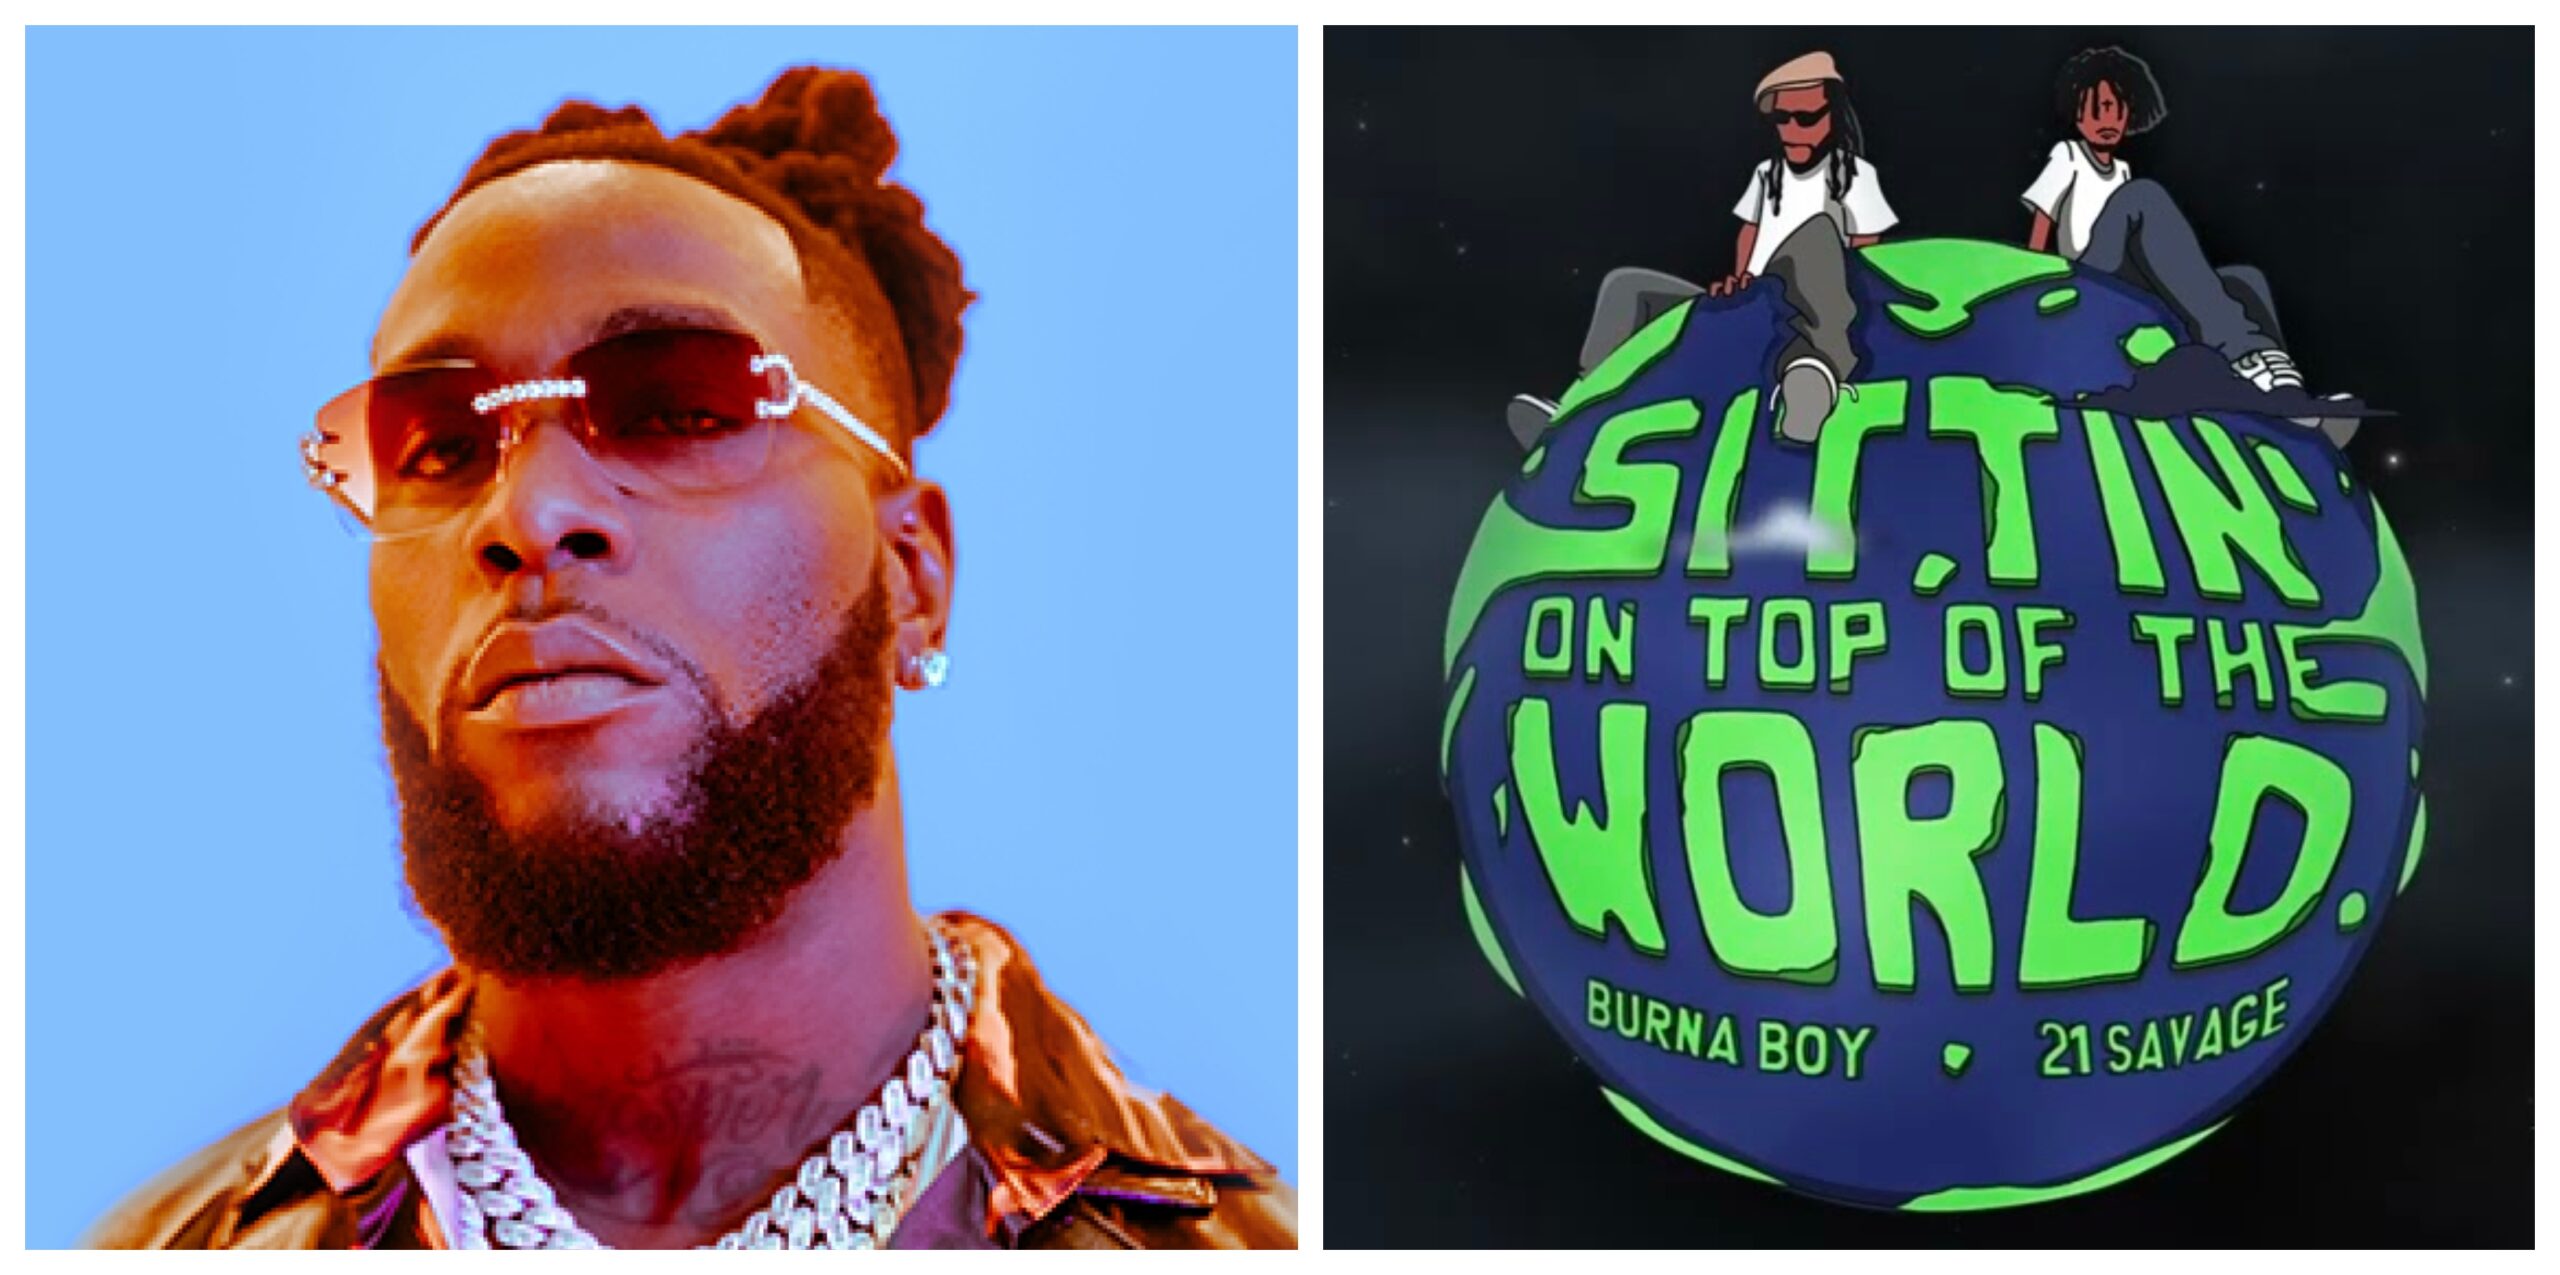 Burna Boy’s ‘Sittin’ On Top Of The World’ Earns First Week At #1 On Rhythmic Radio